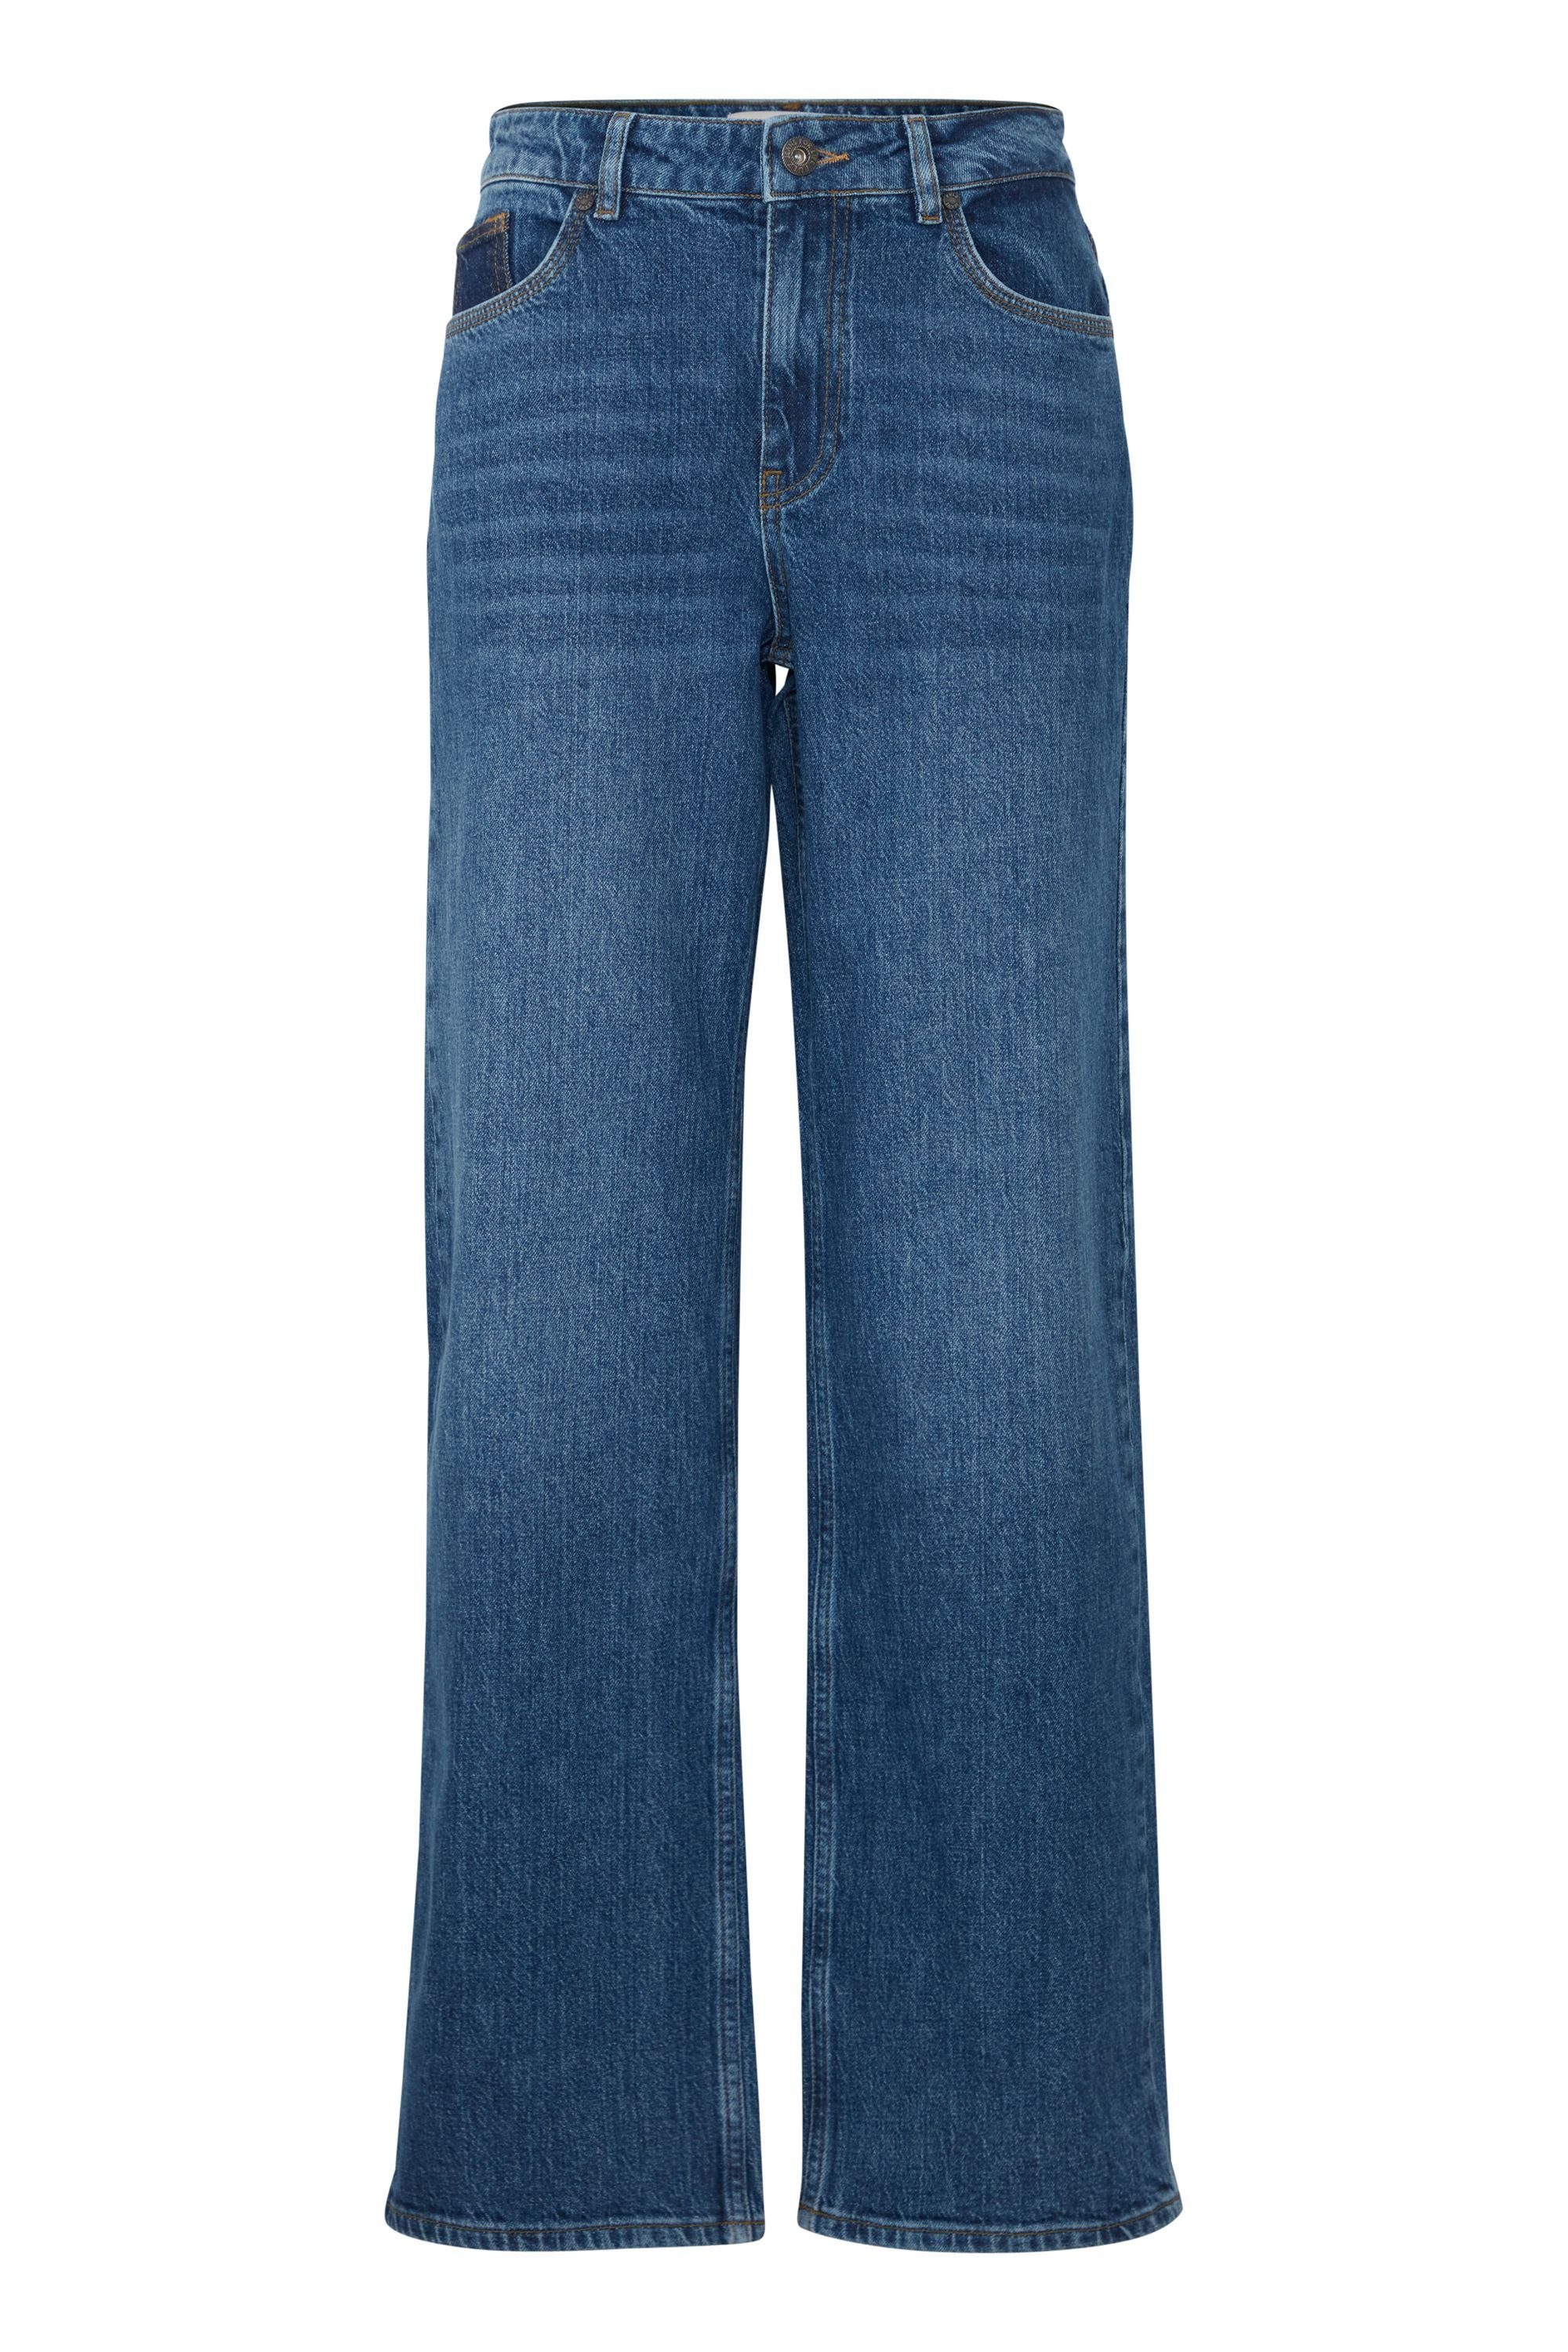 Jeans Jeans blue Medium (200005) 5-Pocket-Jeans denim Wide Leg HW 50207173 Pulz PZVEGA -